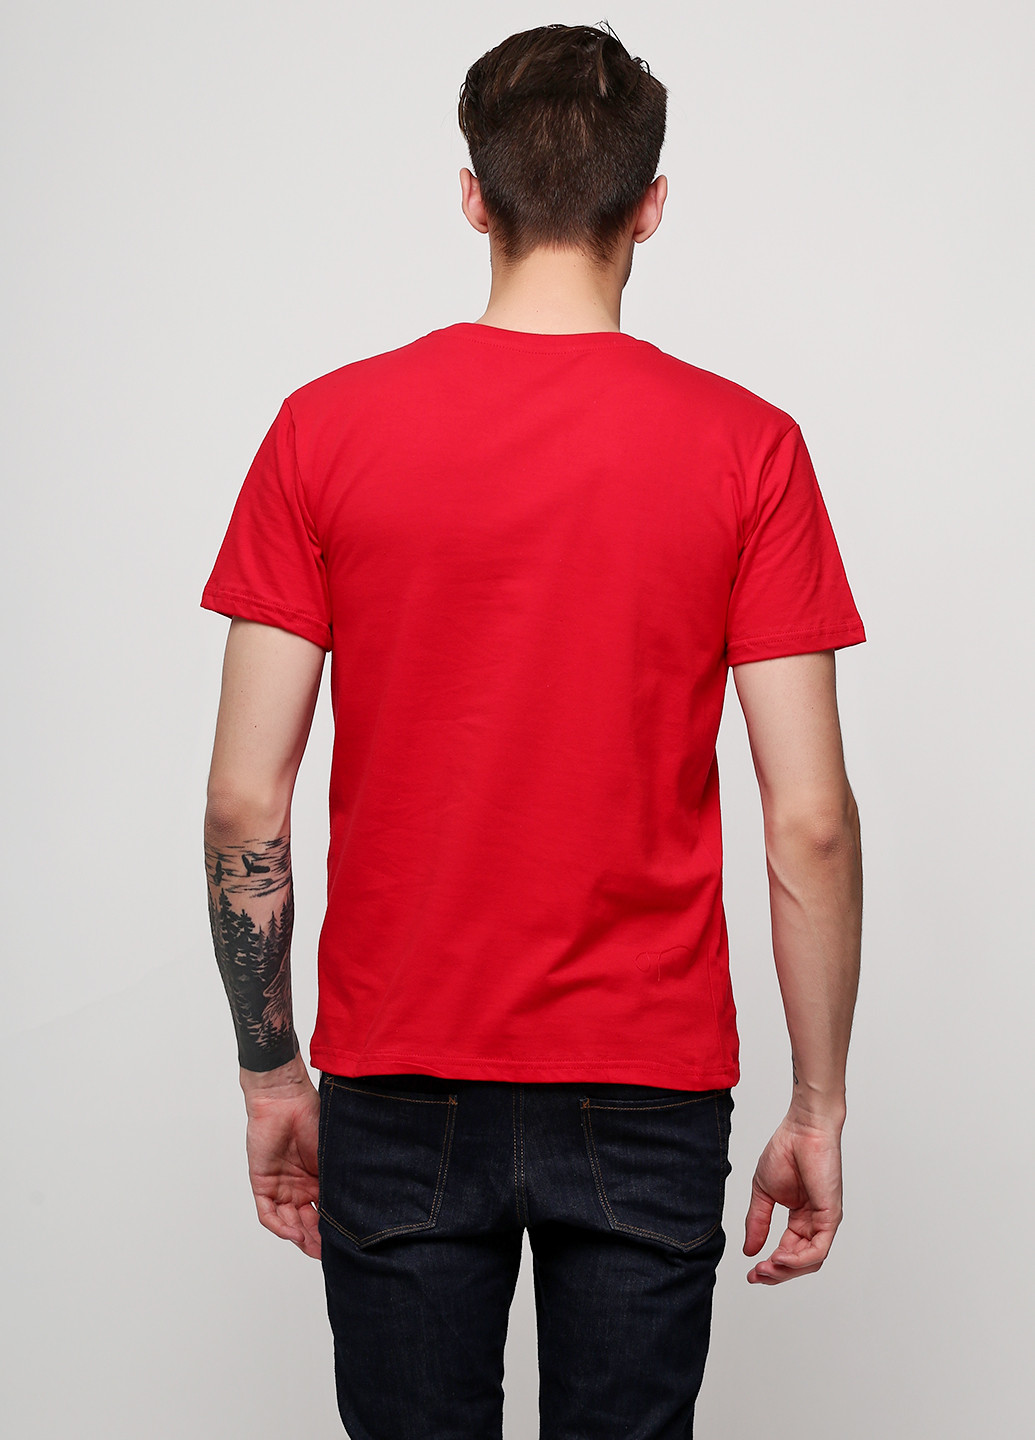 Красная футболка Manatki